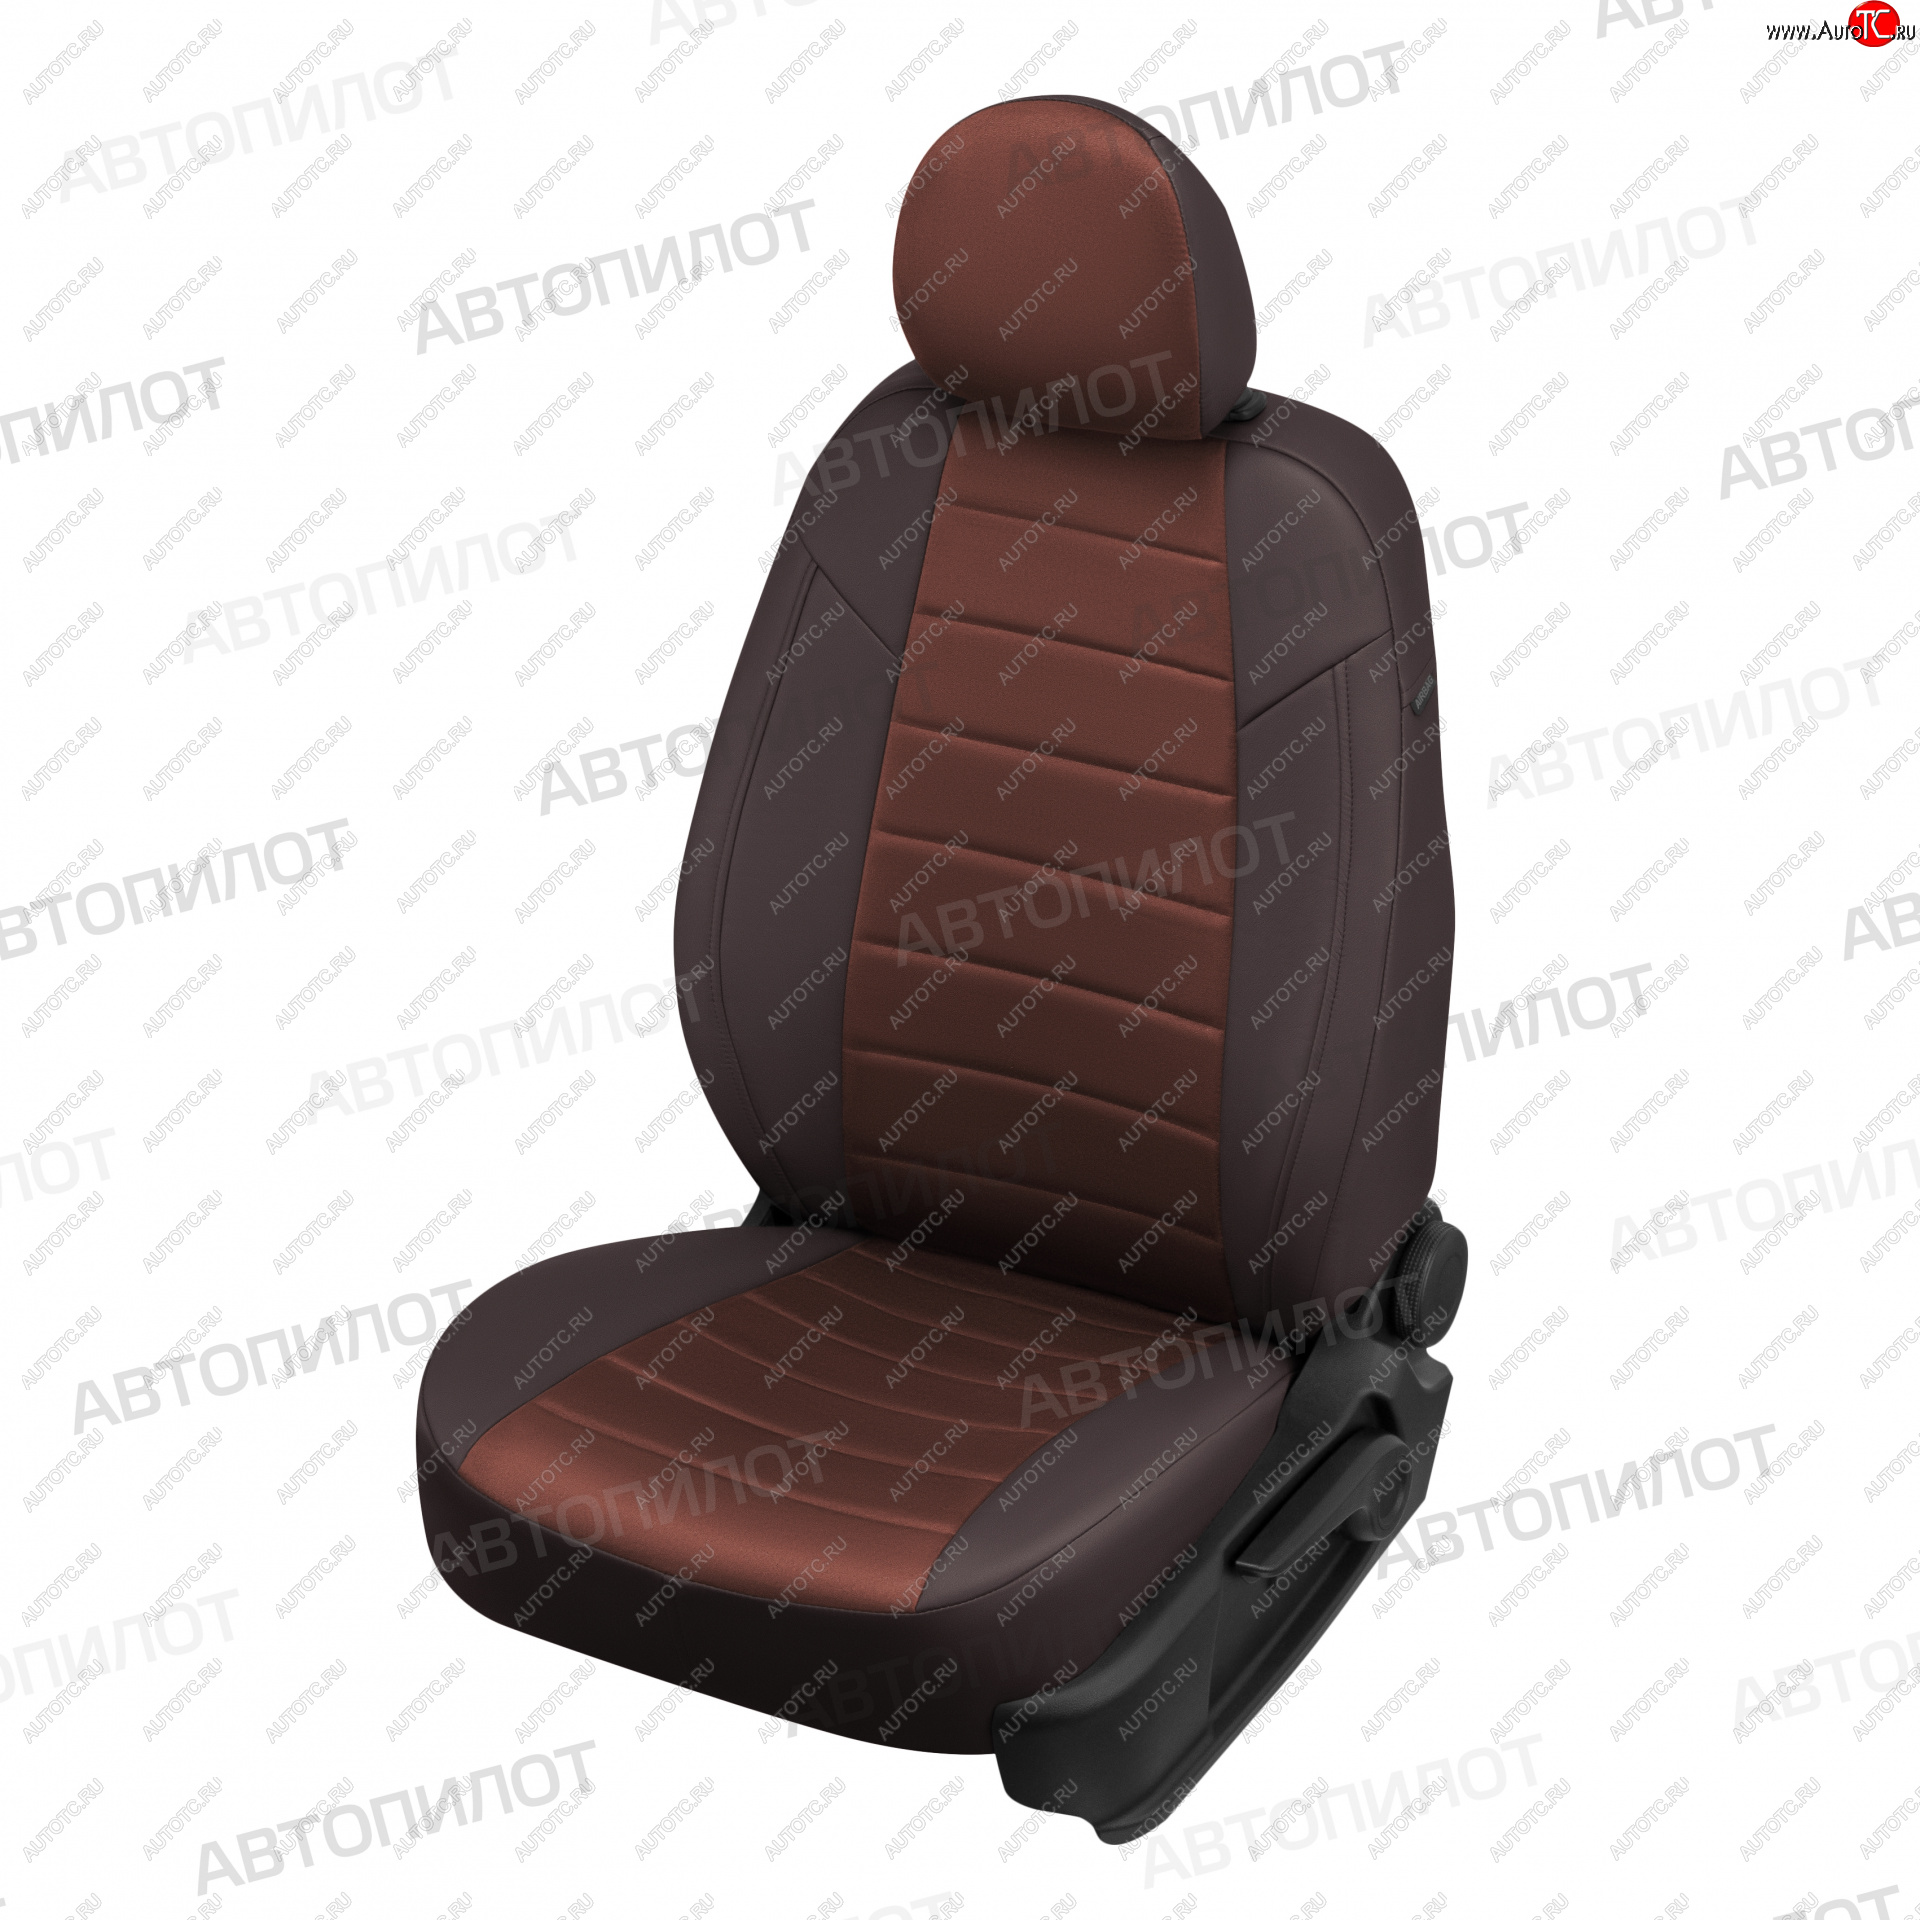 13 449 р. Чехлы сидений (экокожа/алькантара) Автопилот  Ford Kuga  2 (2013-2019) (шоколад)